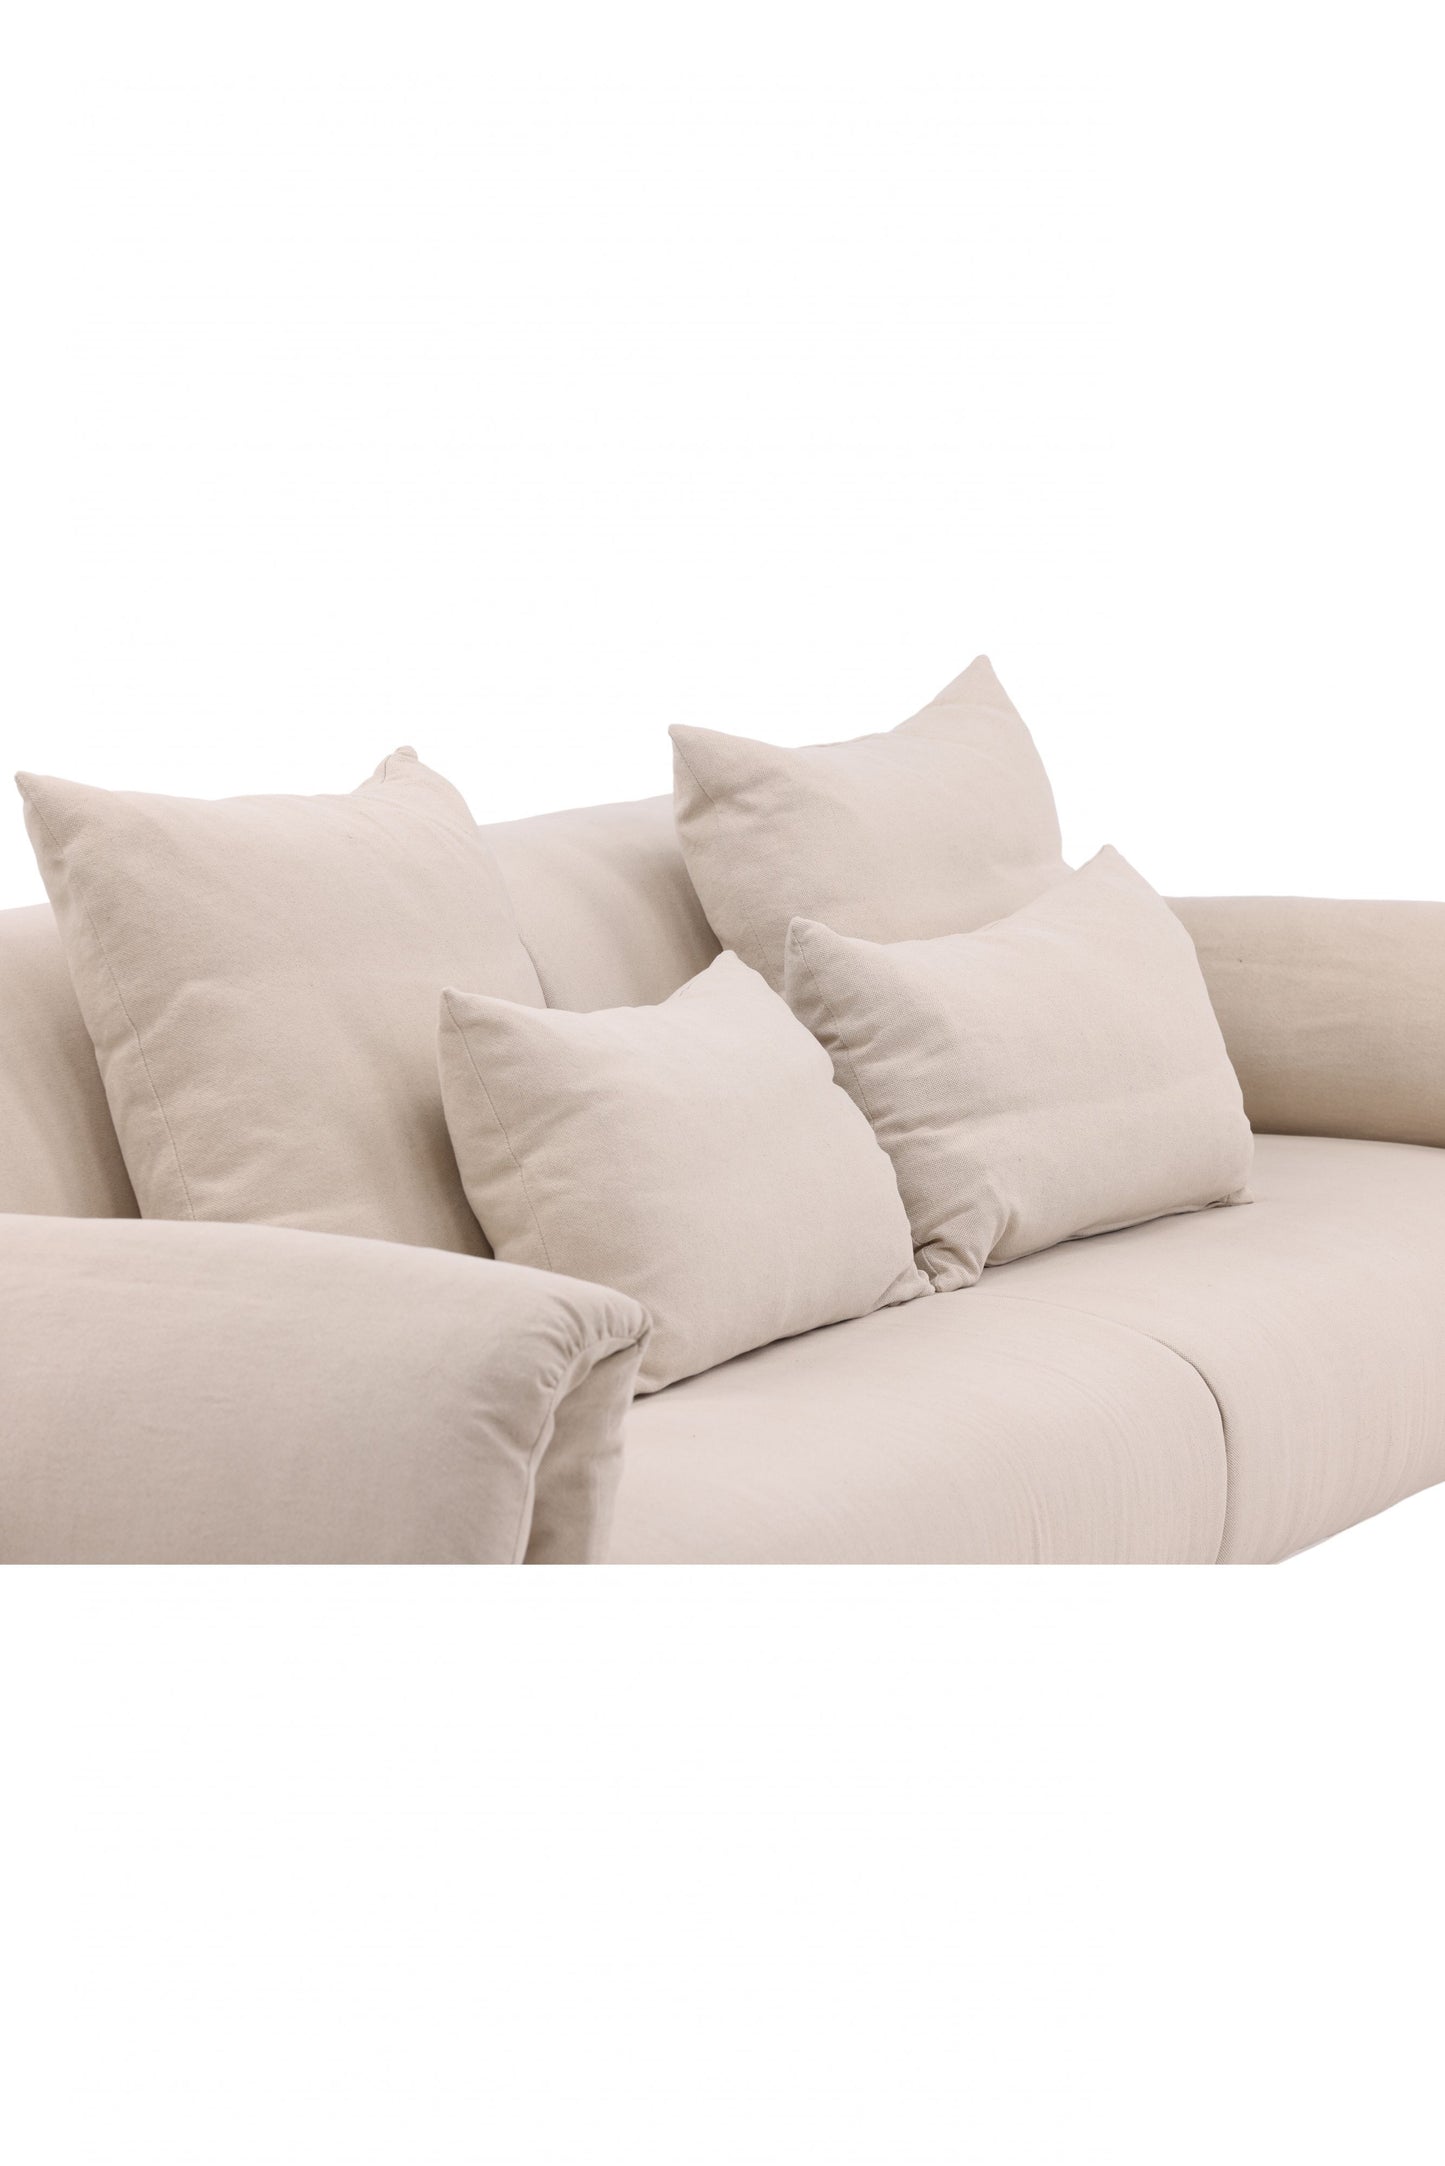 Öckerö - Sofa, Hvid / Beige Linen